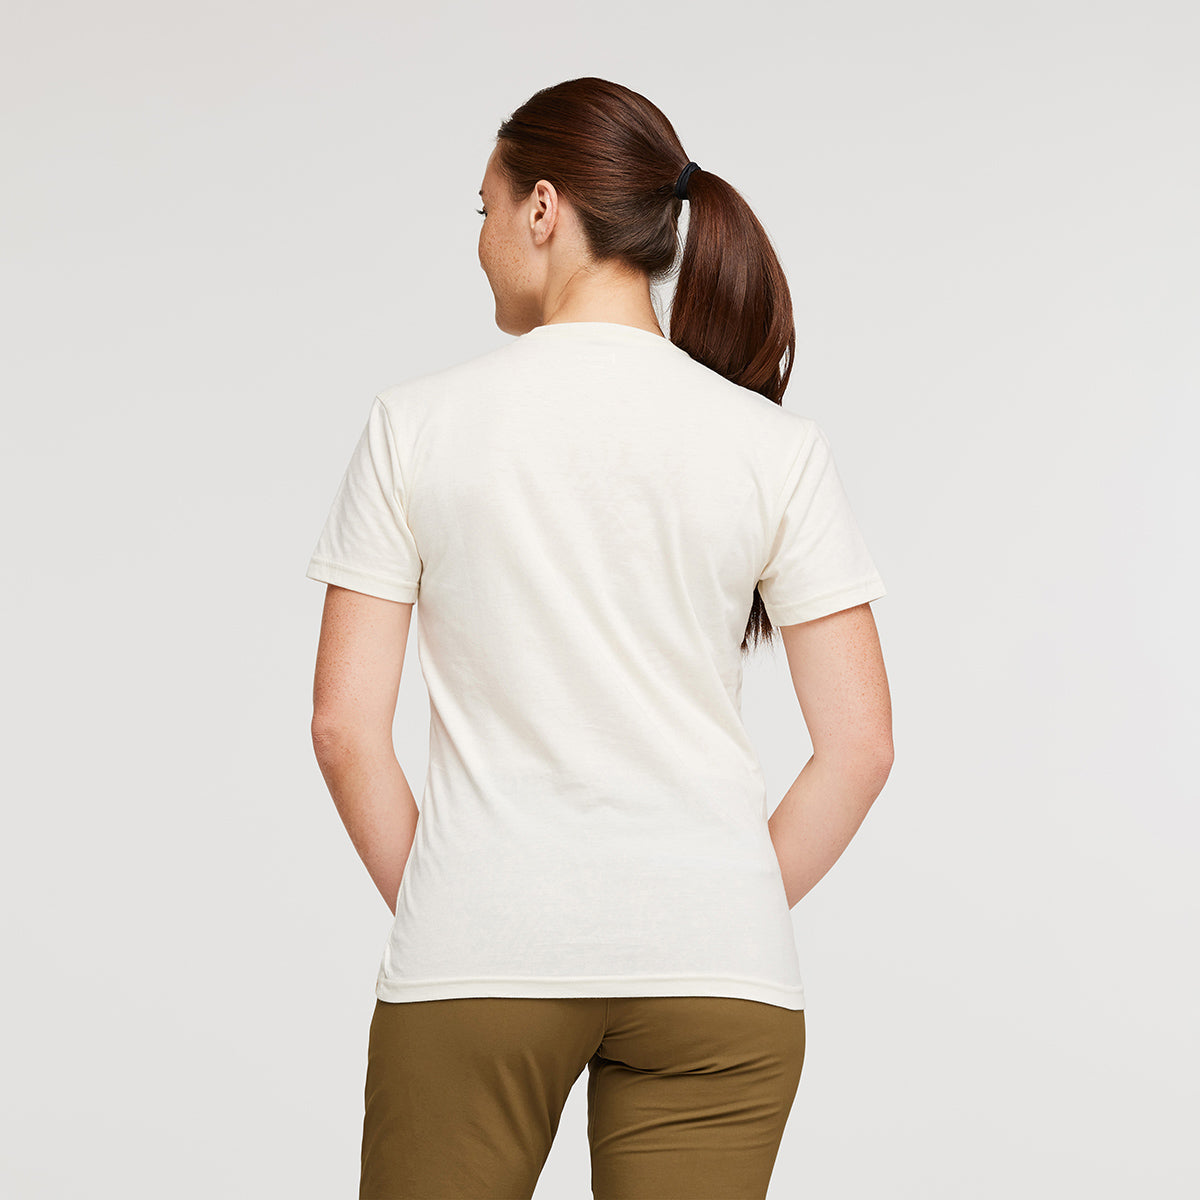 Cotopaxi Do Good Stripe Organic T-Shirt - WOMENS コトパクシ ドゥグッド ストライプ オーガニック Tシャツ レディース